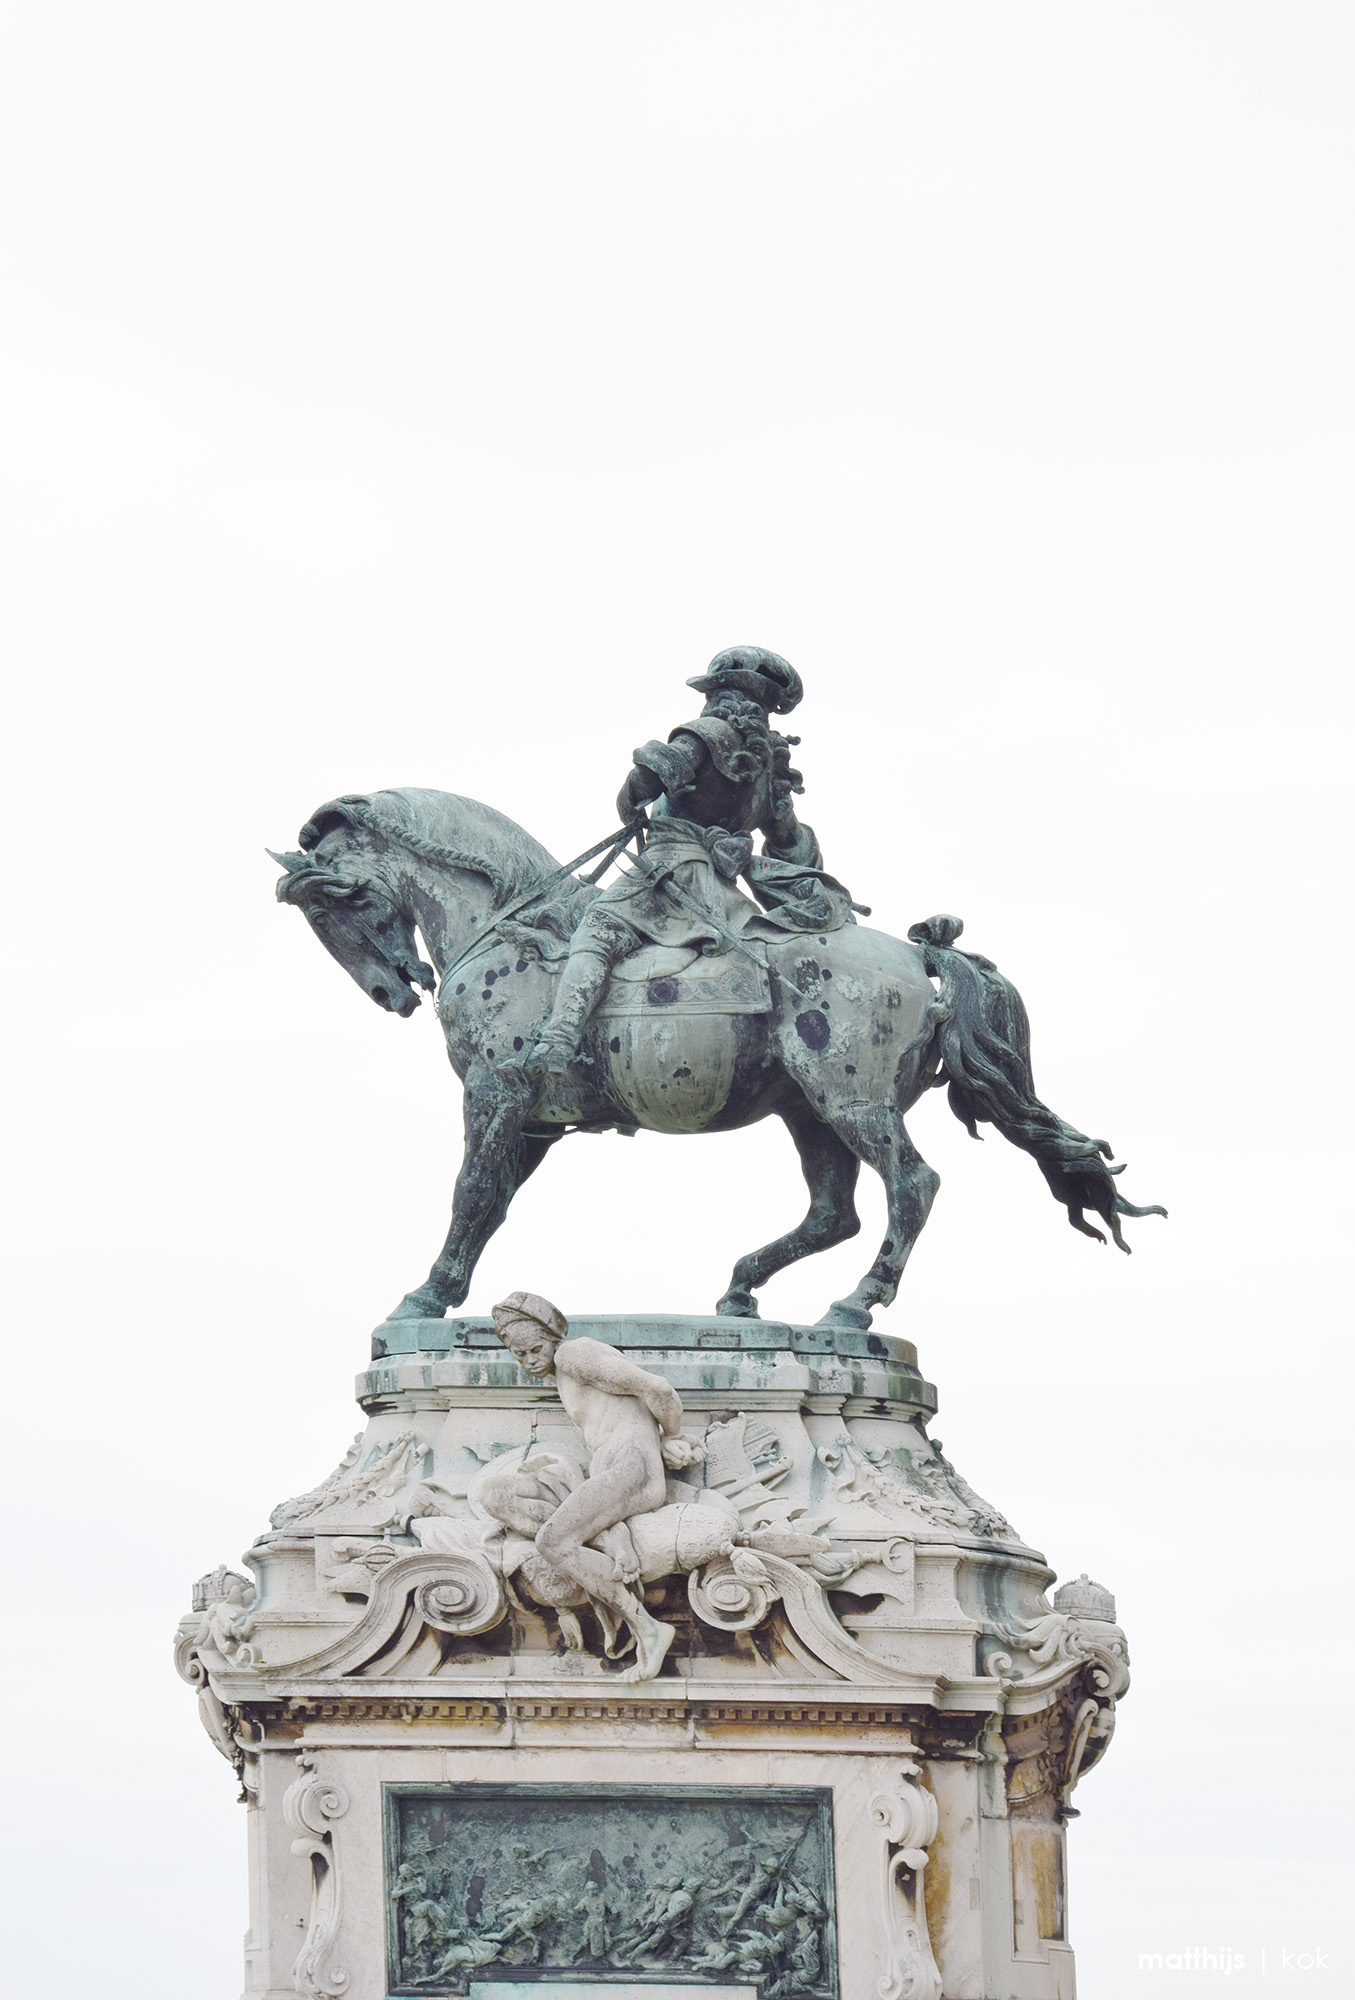 Eugene of Savoy Statue, Budapest, Hungary | Photo by Matthijs Kok